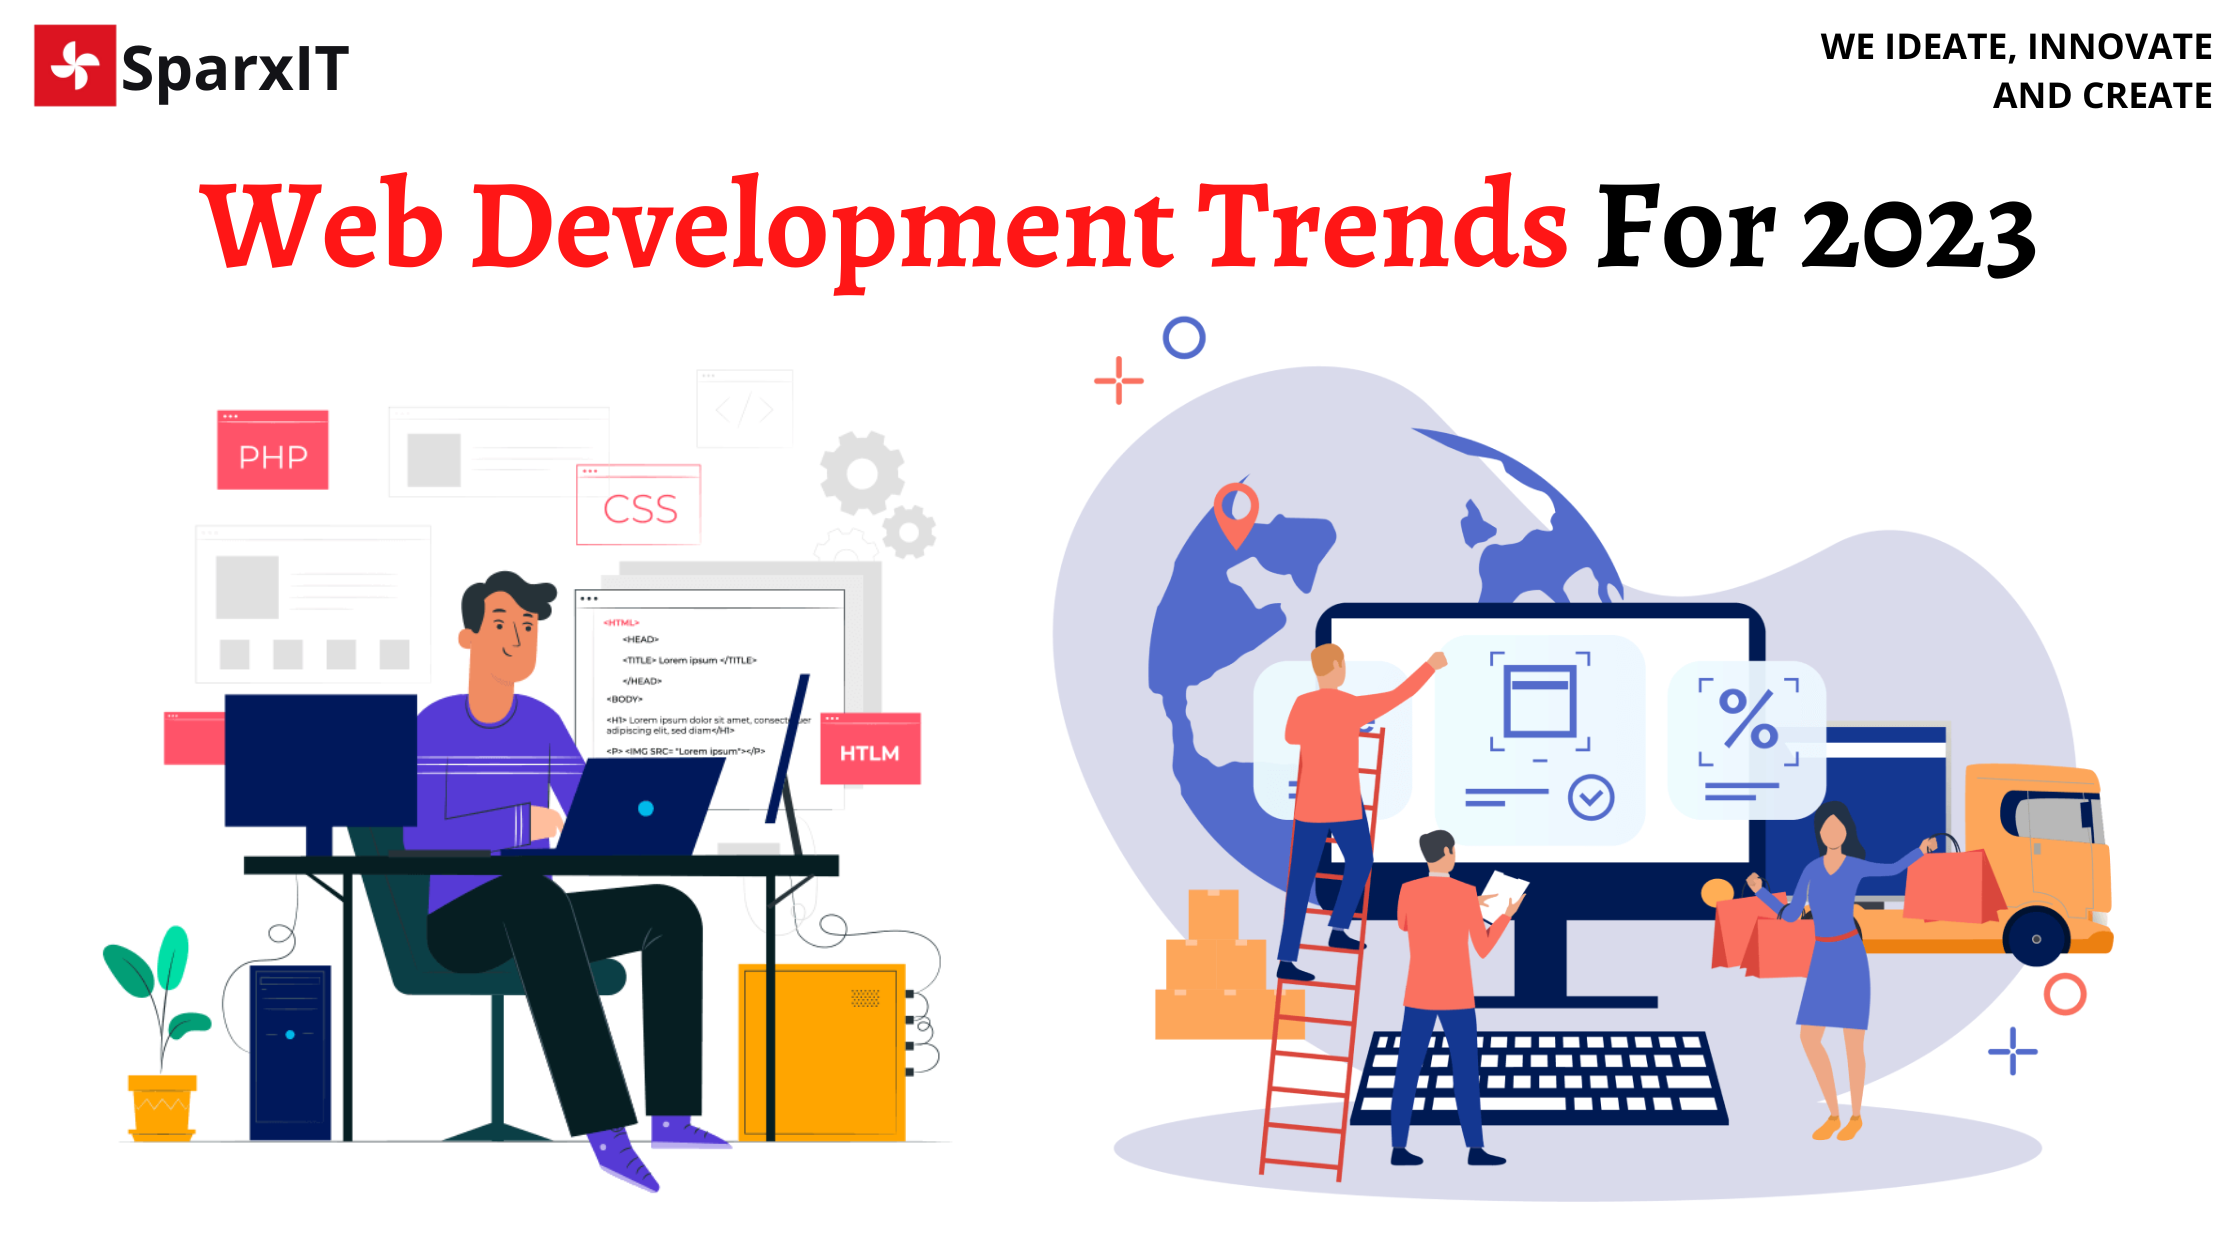 Web Development Trends For 2023